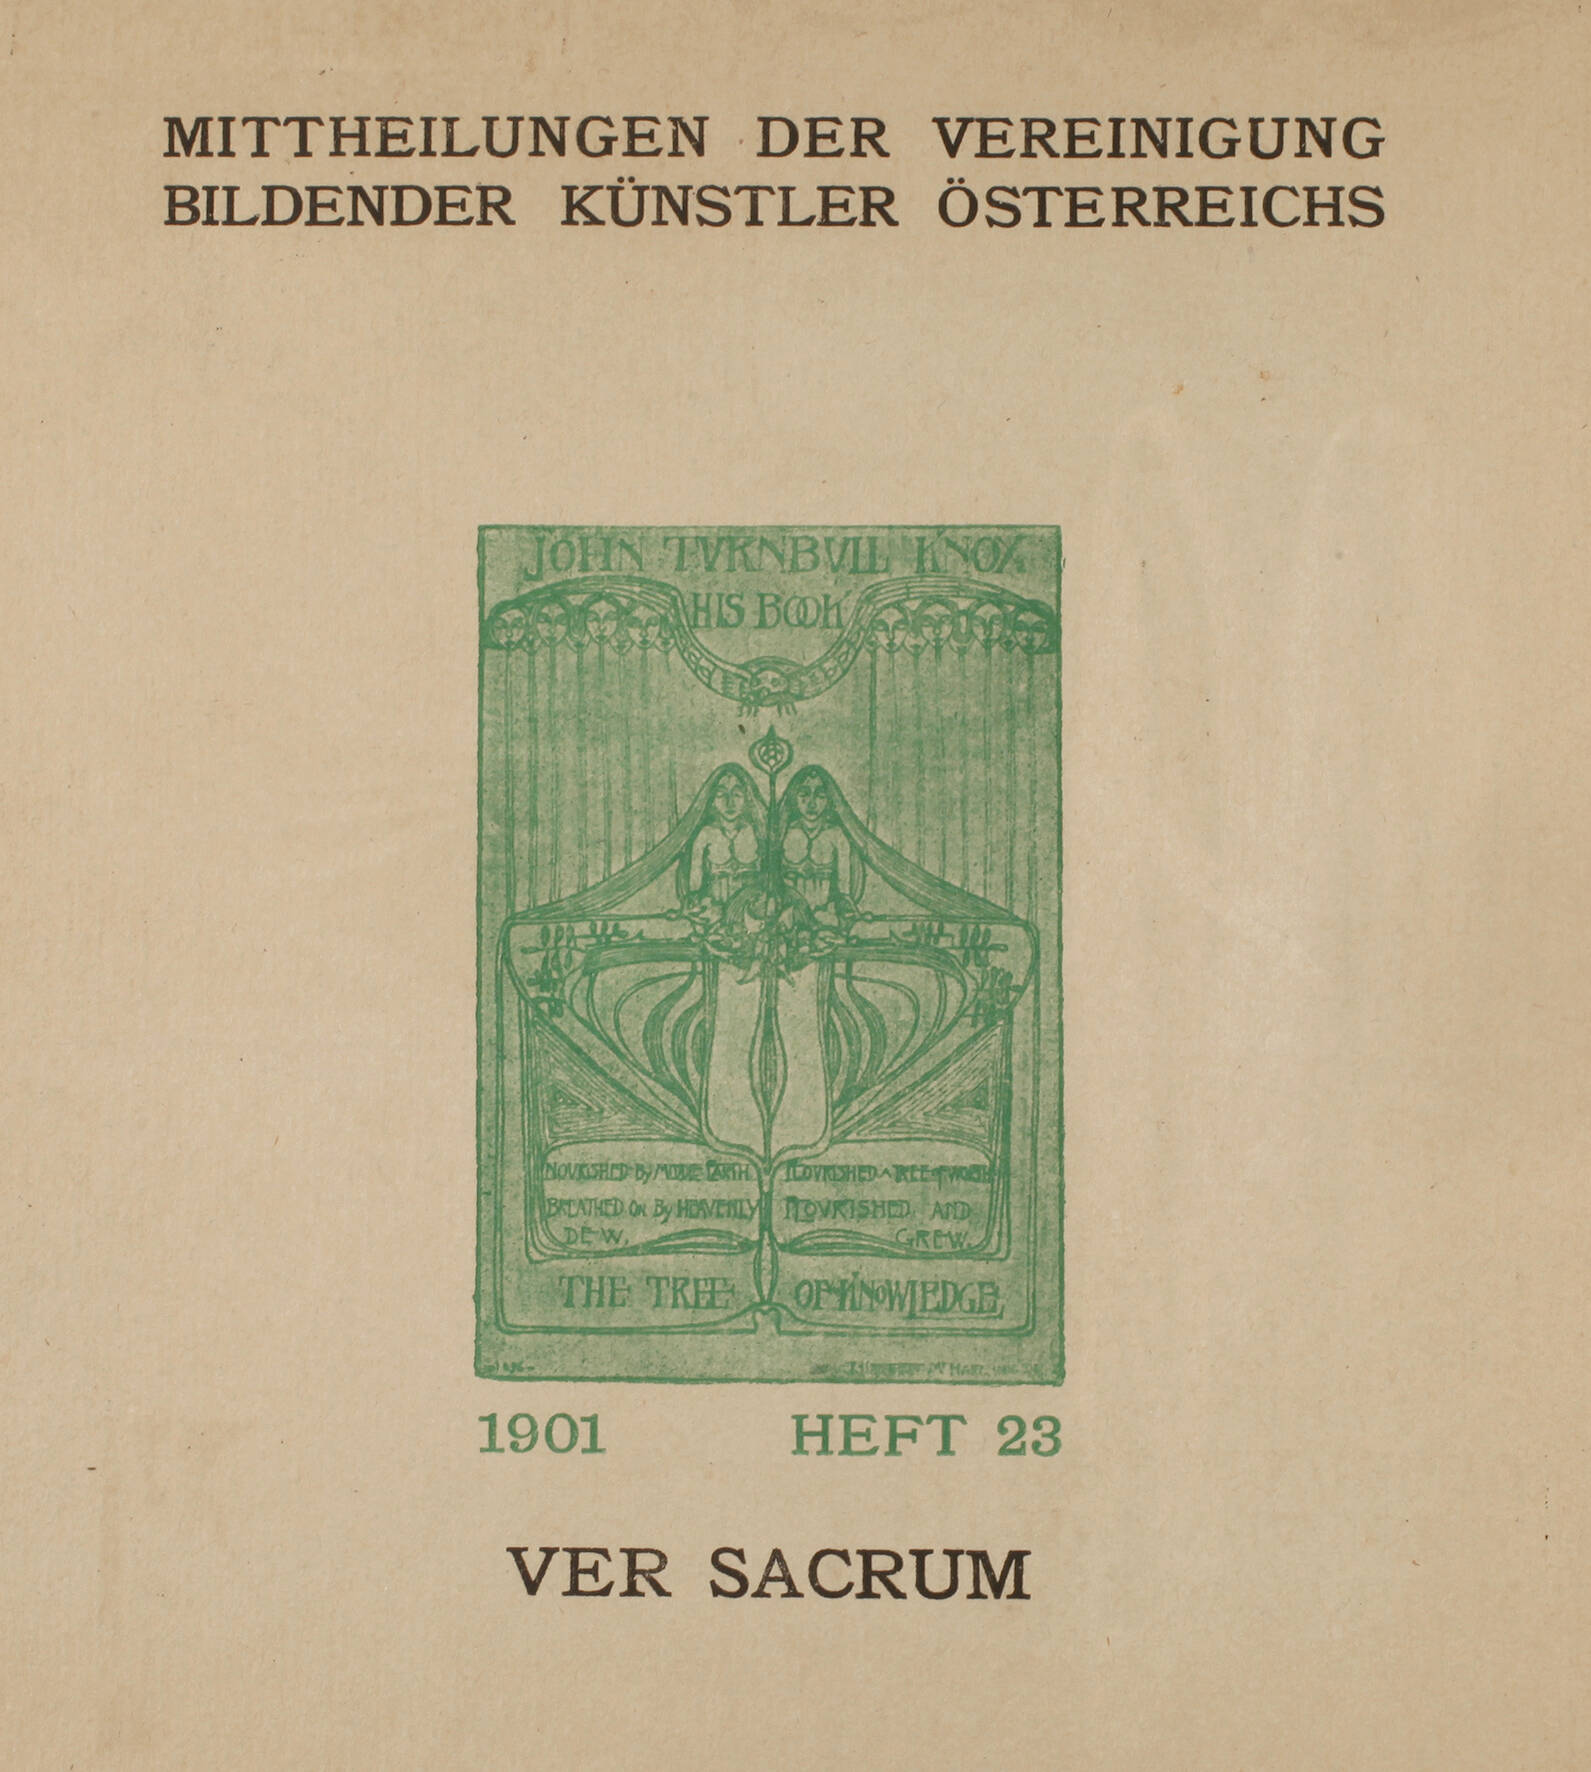 Titelblatt "Ver Sacrum"